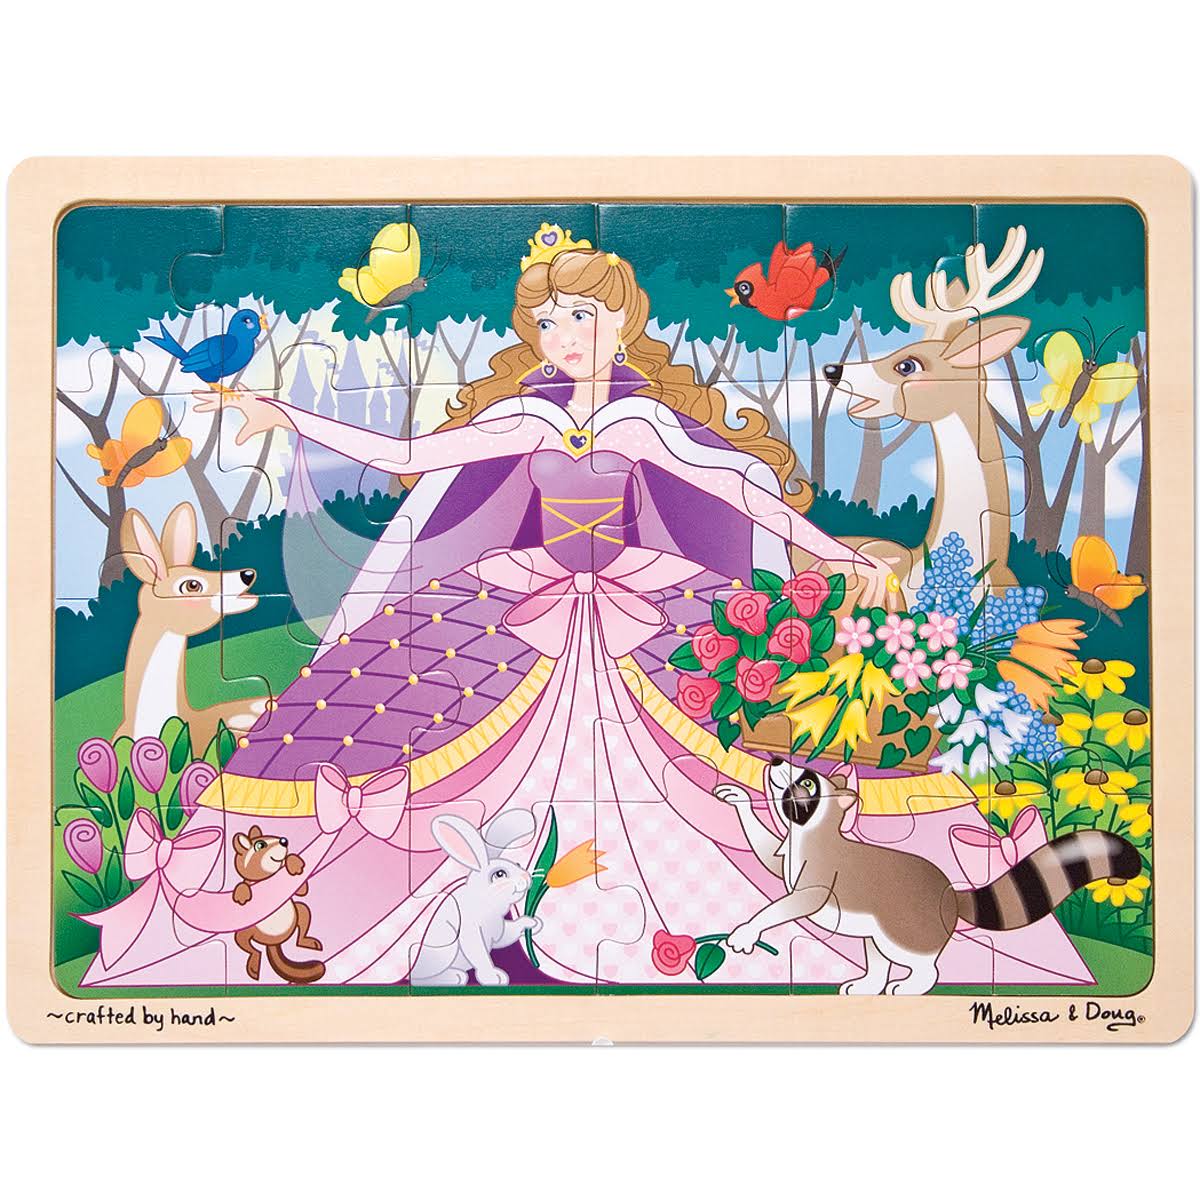 Melissa and Doug Wooden Jigsaw Puzzle - Woodland Princess, 24pcs